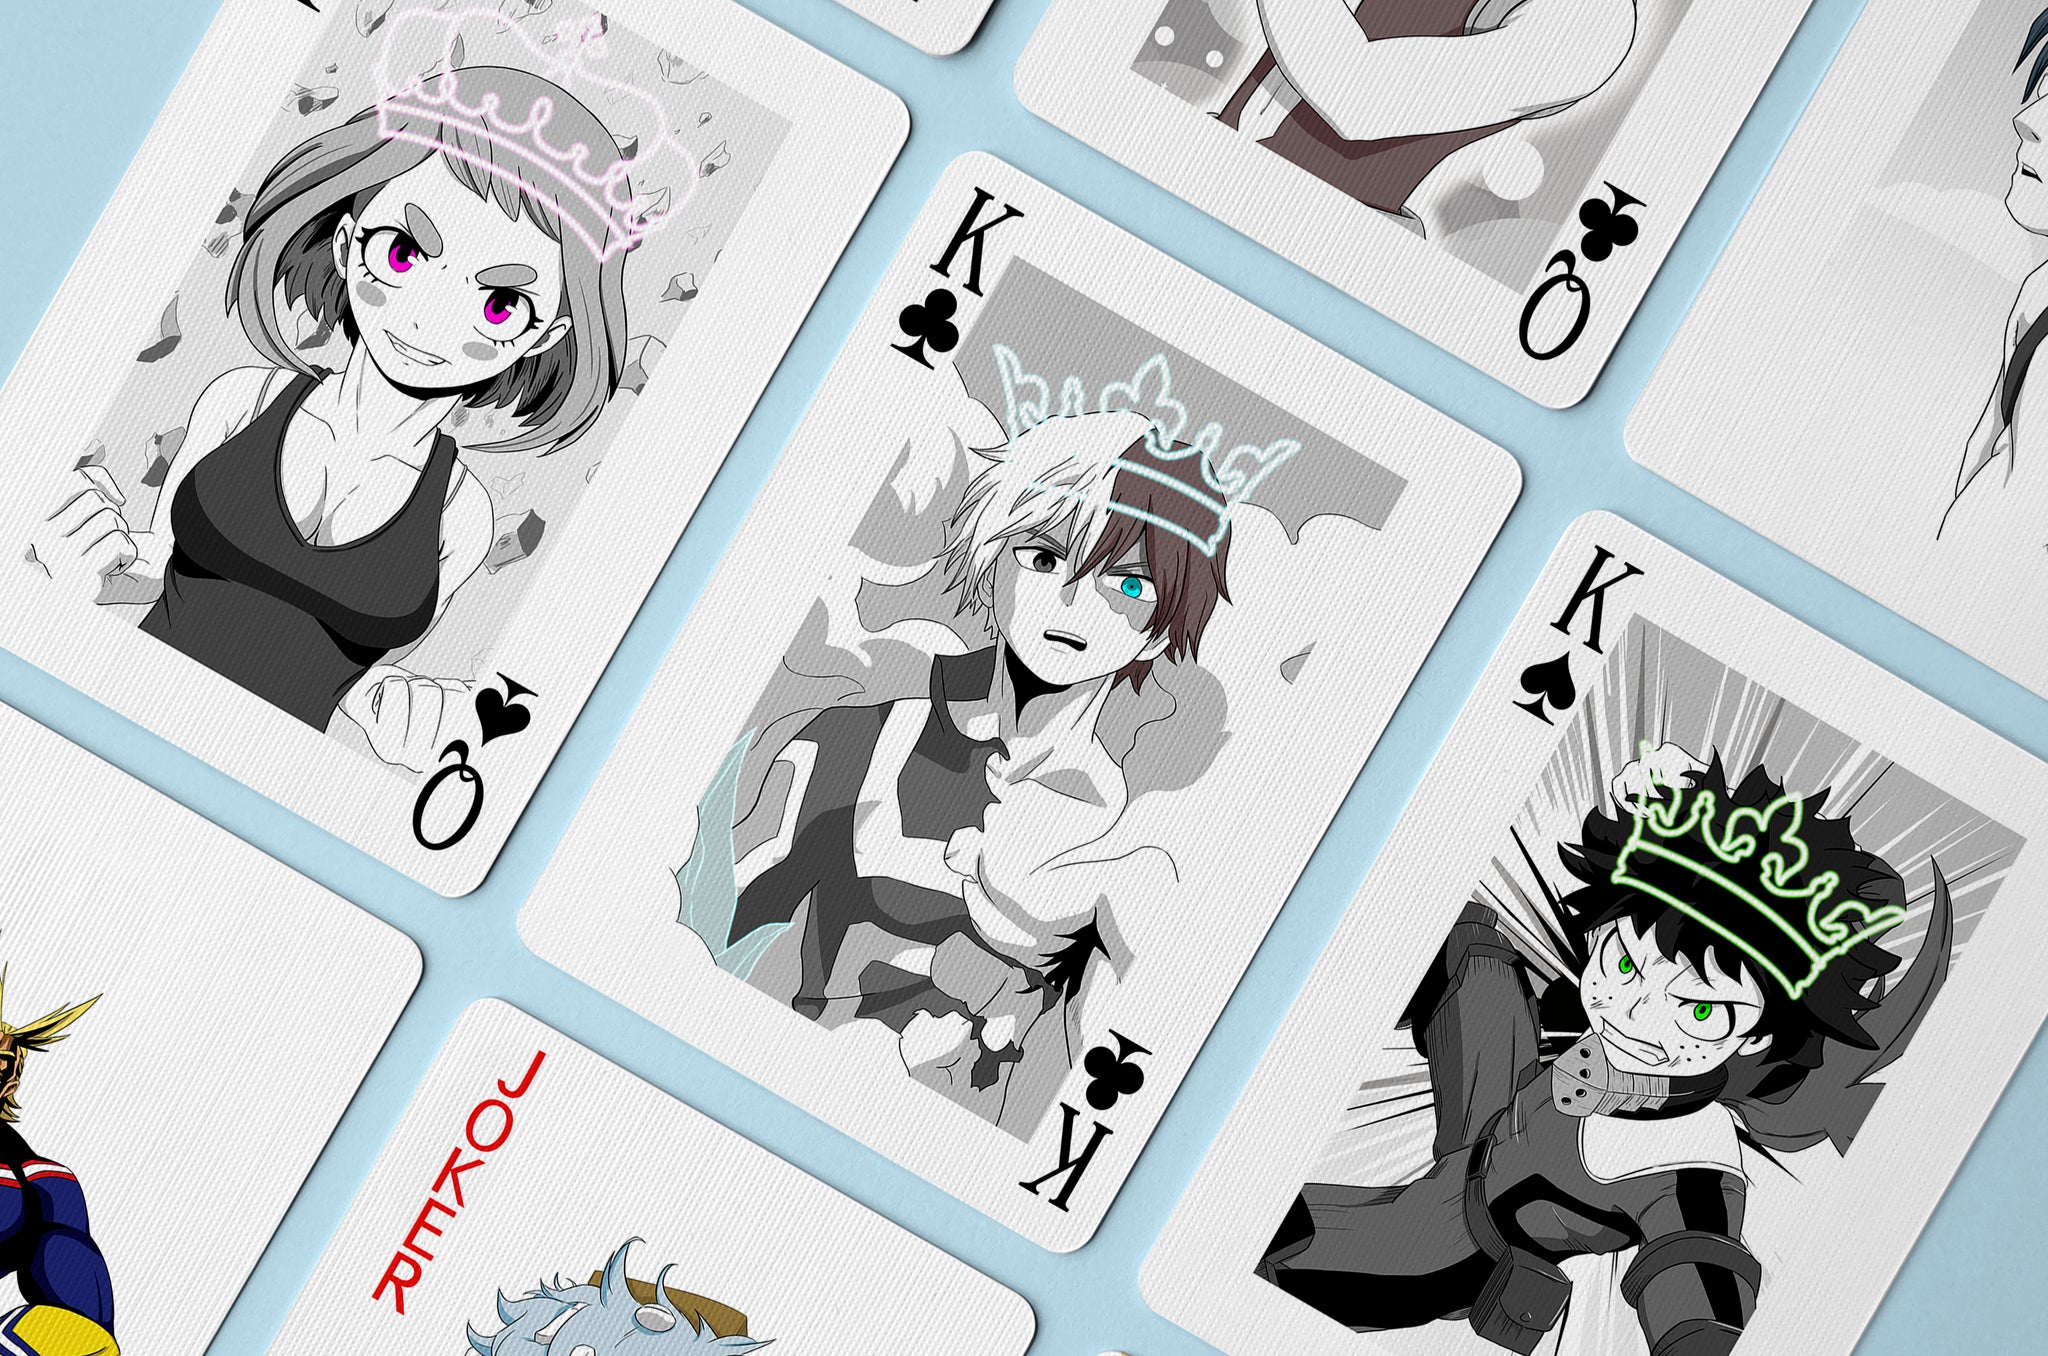 Anime girl Samurai Playing Cards | Zazzle